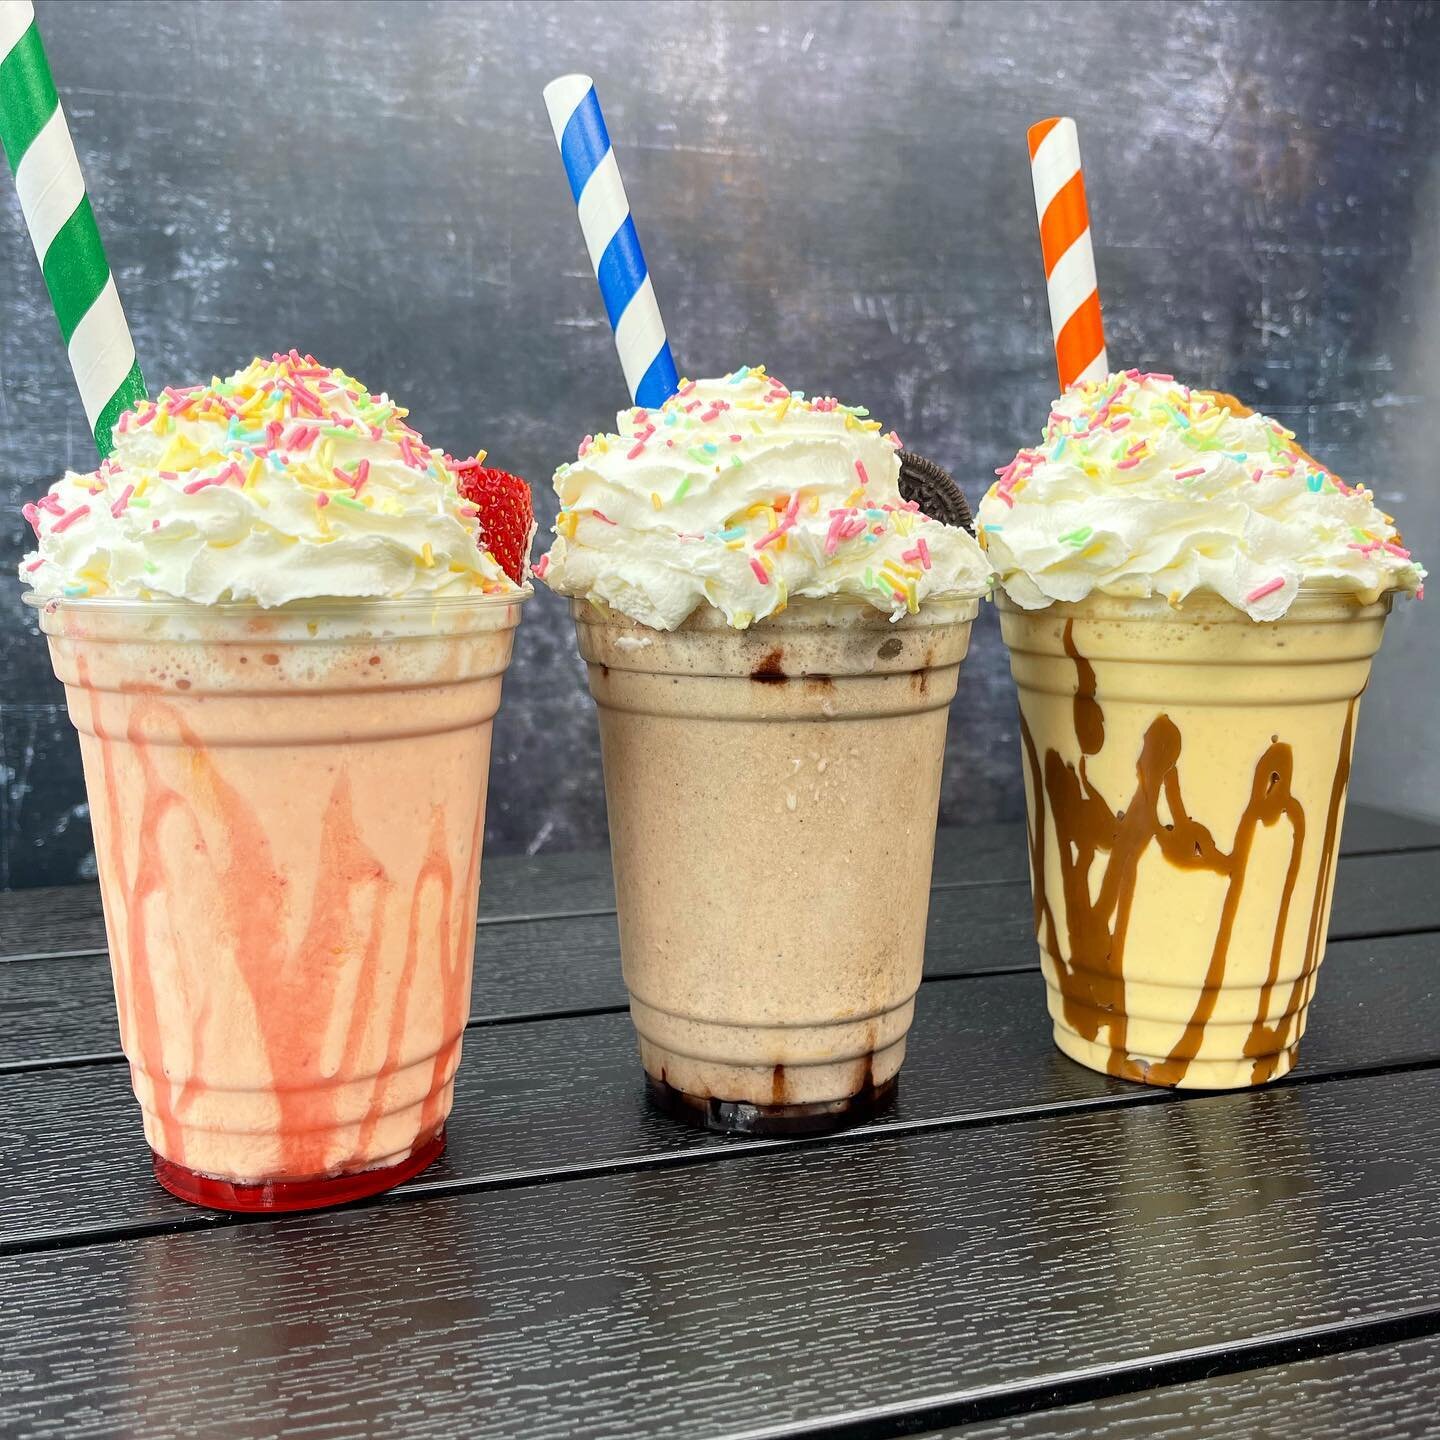 Milkshake mania🍦

Thick &amp; chunky shakes all round 😌 #milkshakemania #thickshakes #manvsfoodlondon